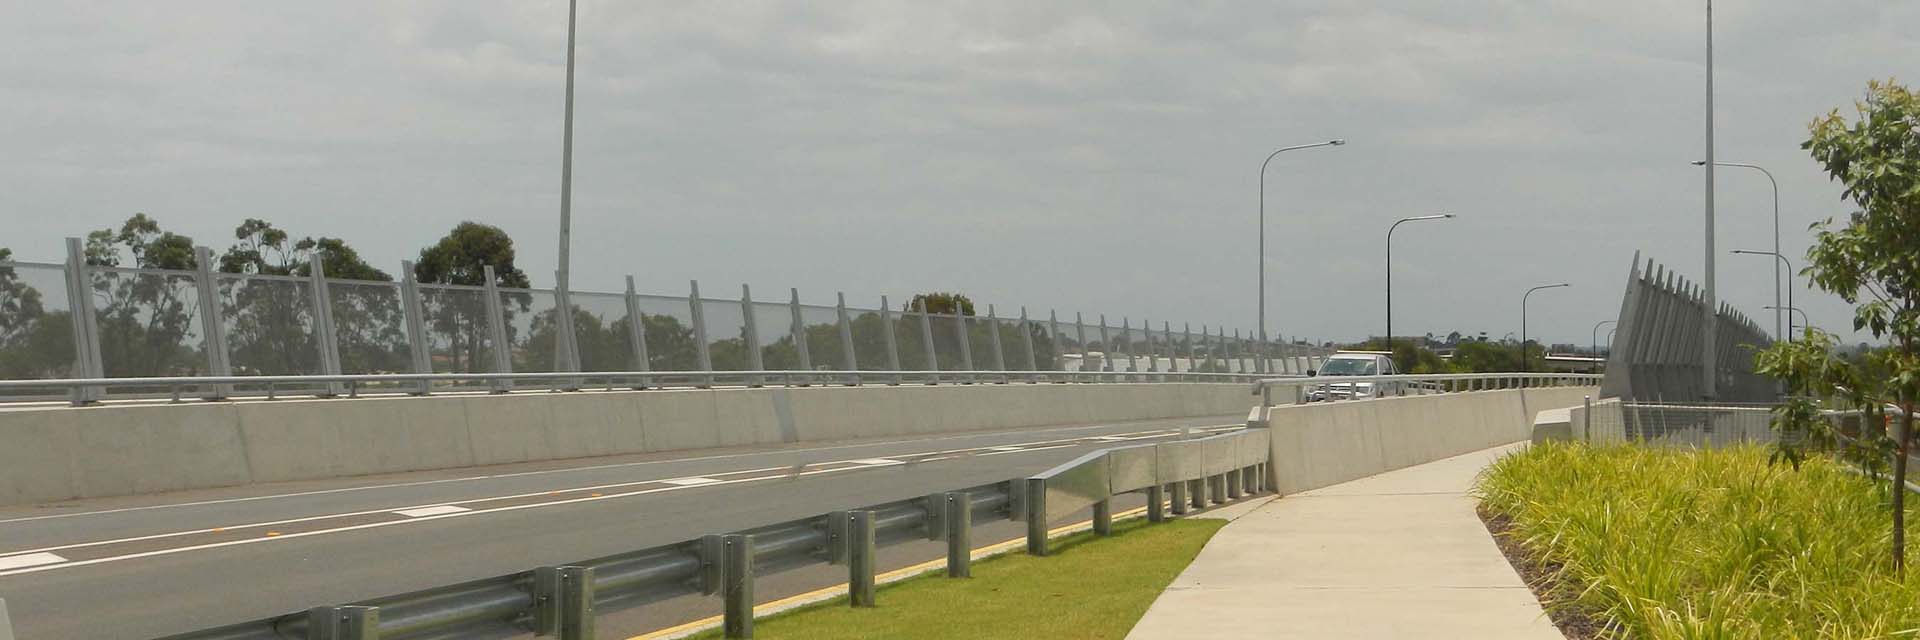 Steel Anti-Throw Screens, Bike Safety Rail, Lampstand Brackets – Plantation Rd Bridge, Dakabin.